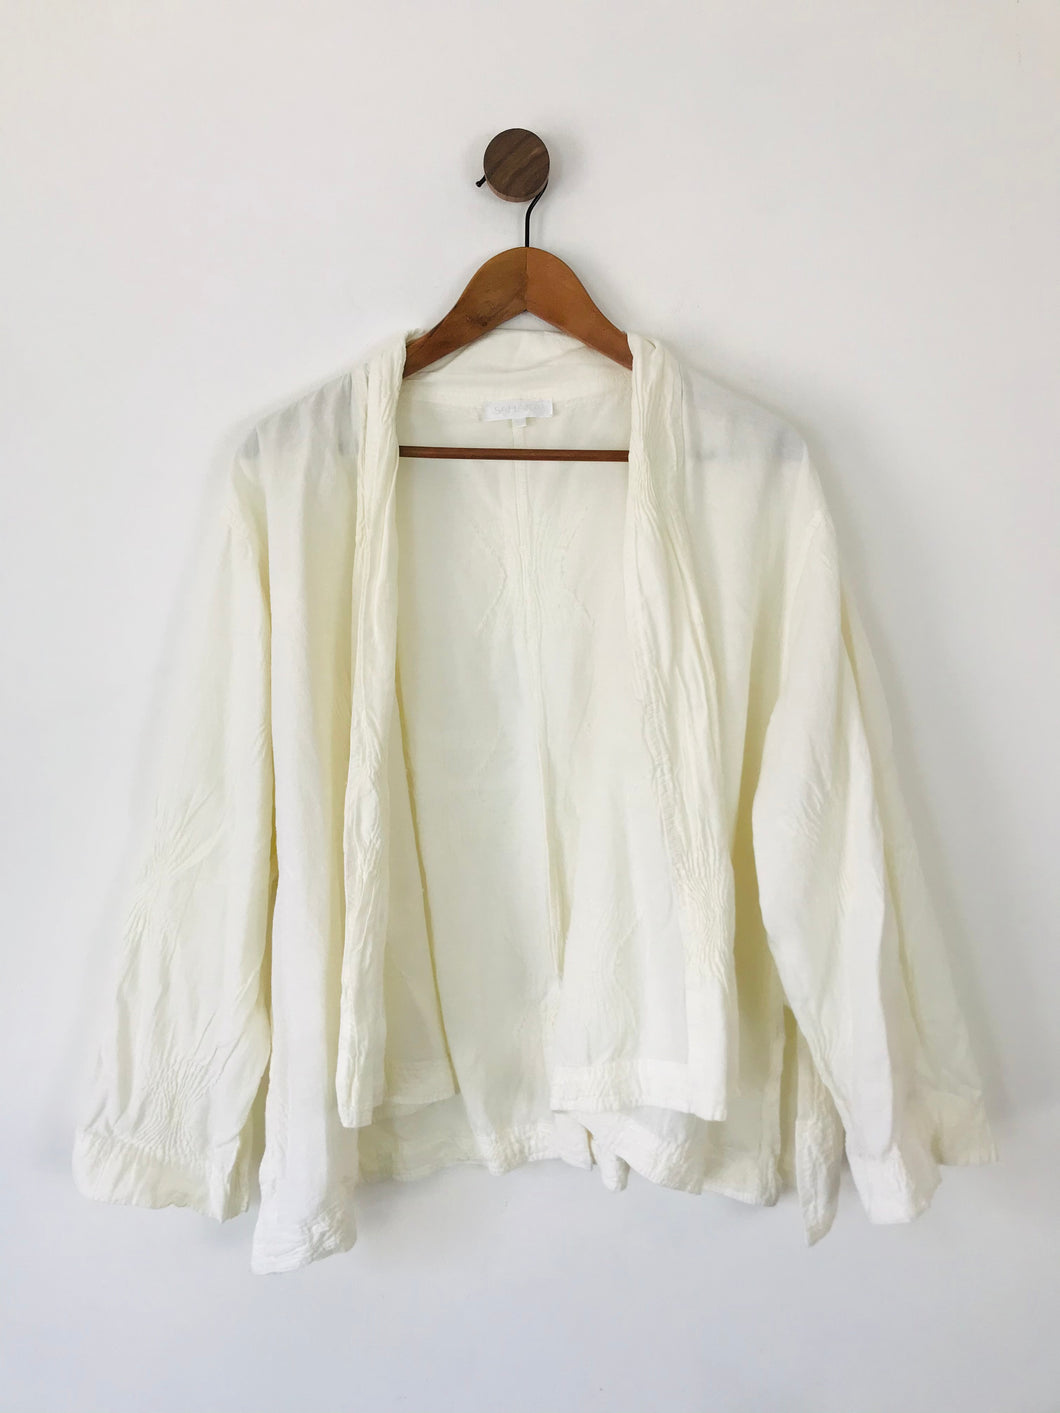 Sahara Women’s Kimono Jacket Cardigan | 4 UK16-18 | Cream White